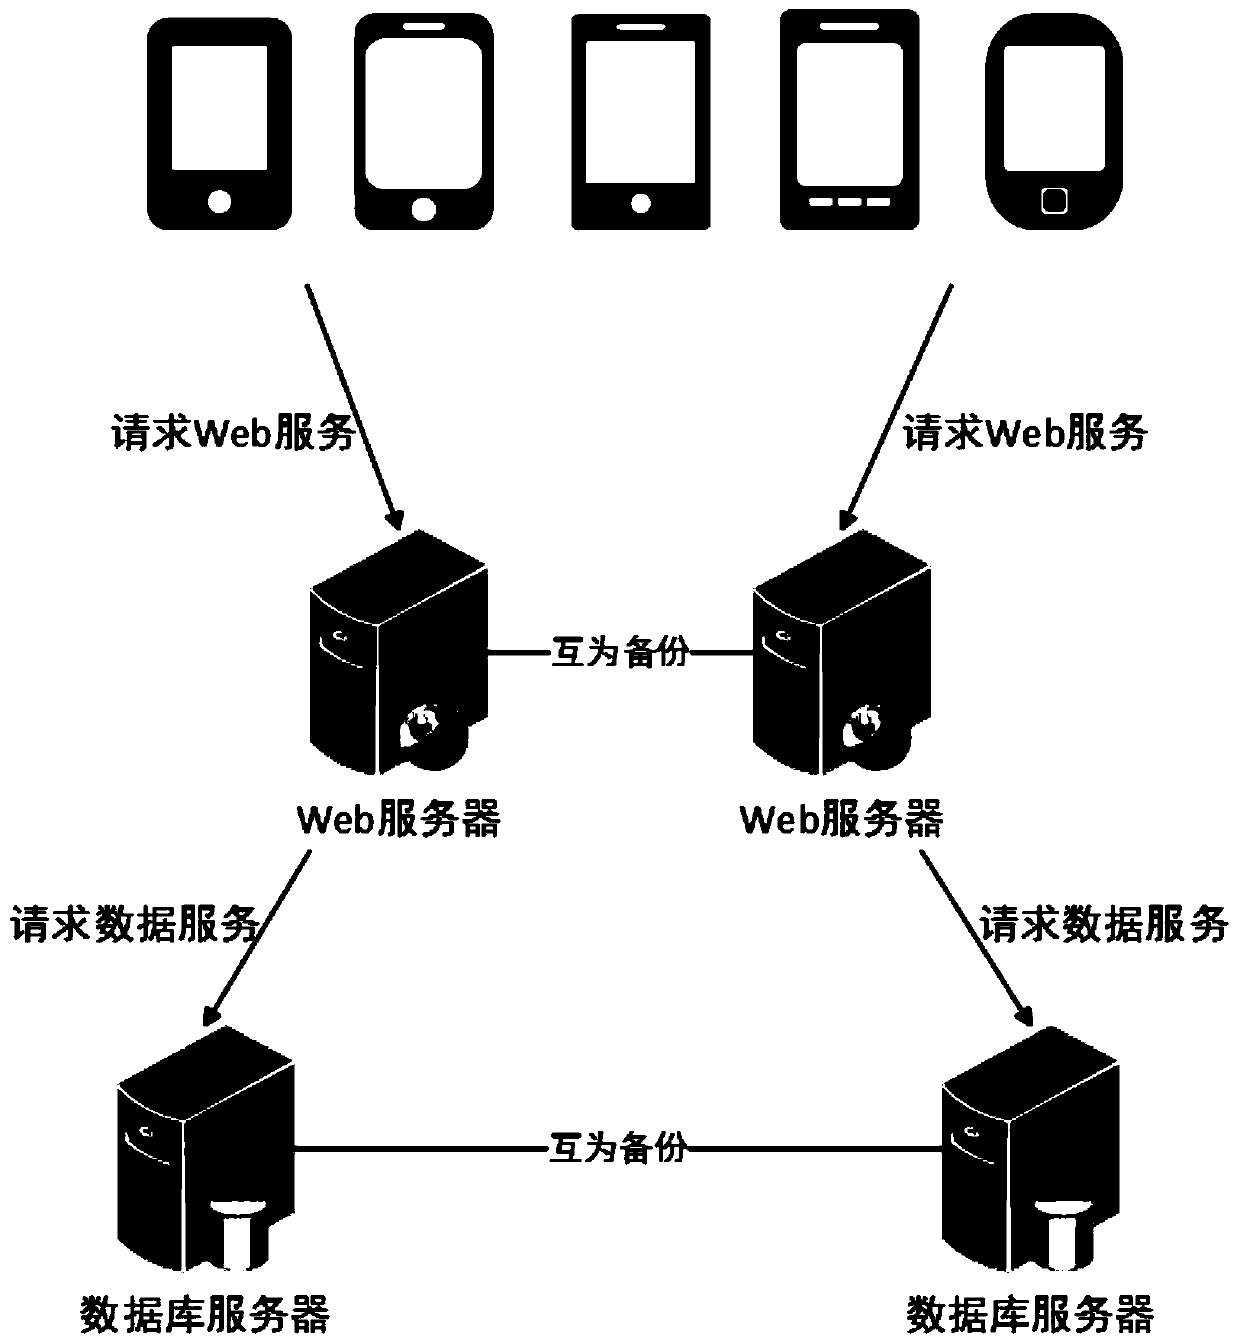 A reservoir multi-level management mobile application system based on cloud service